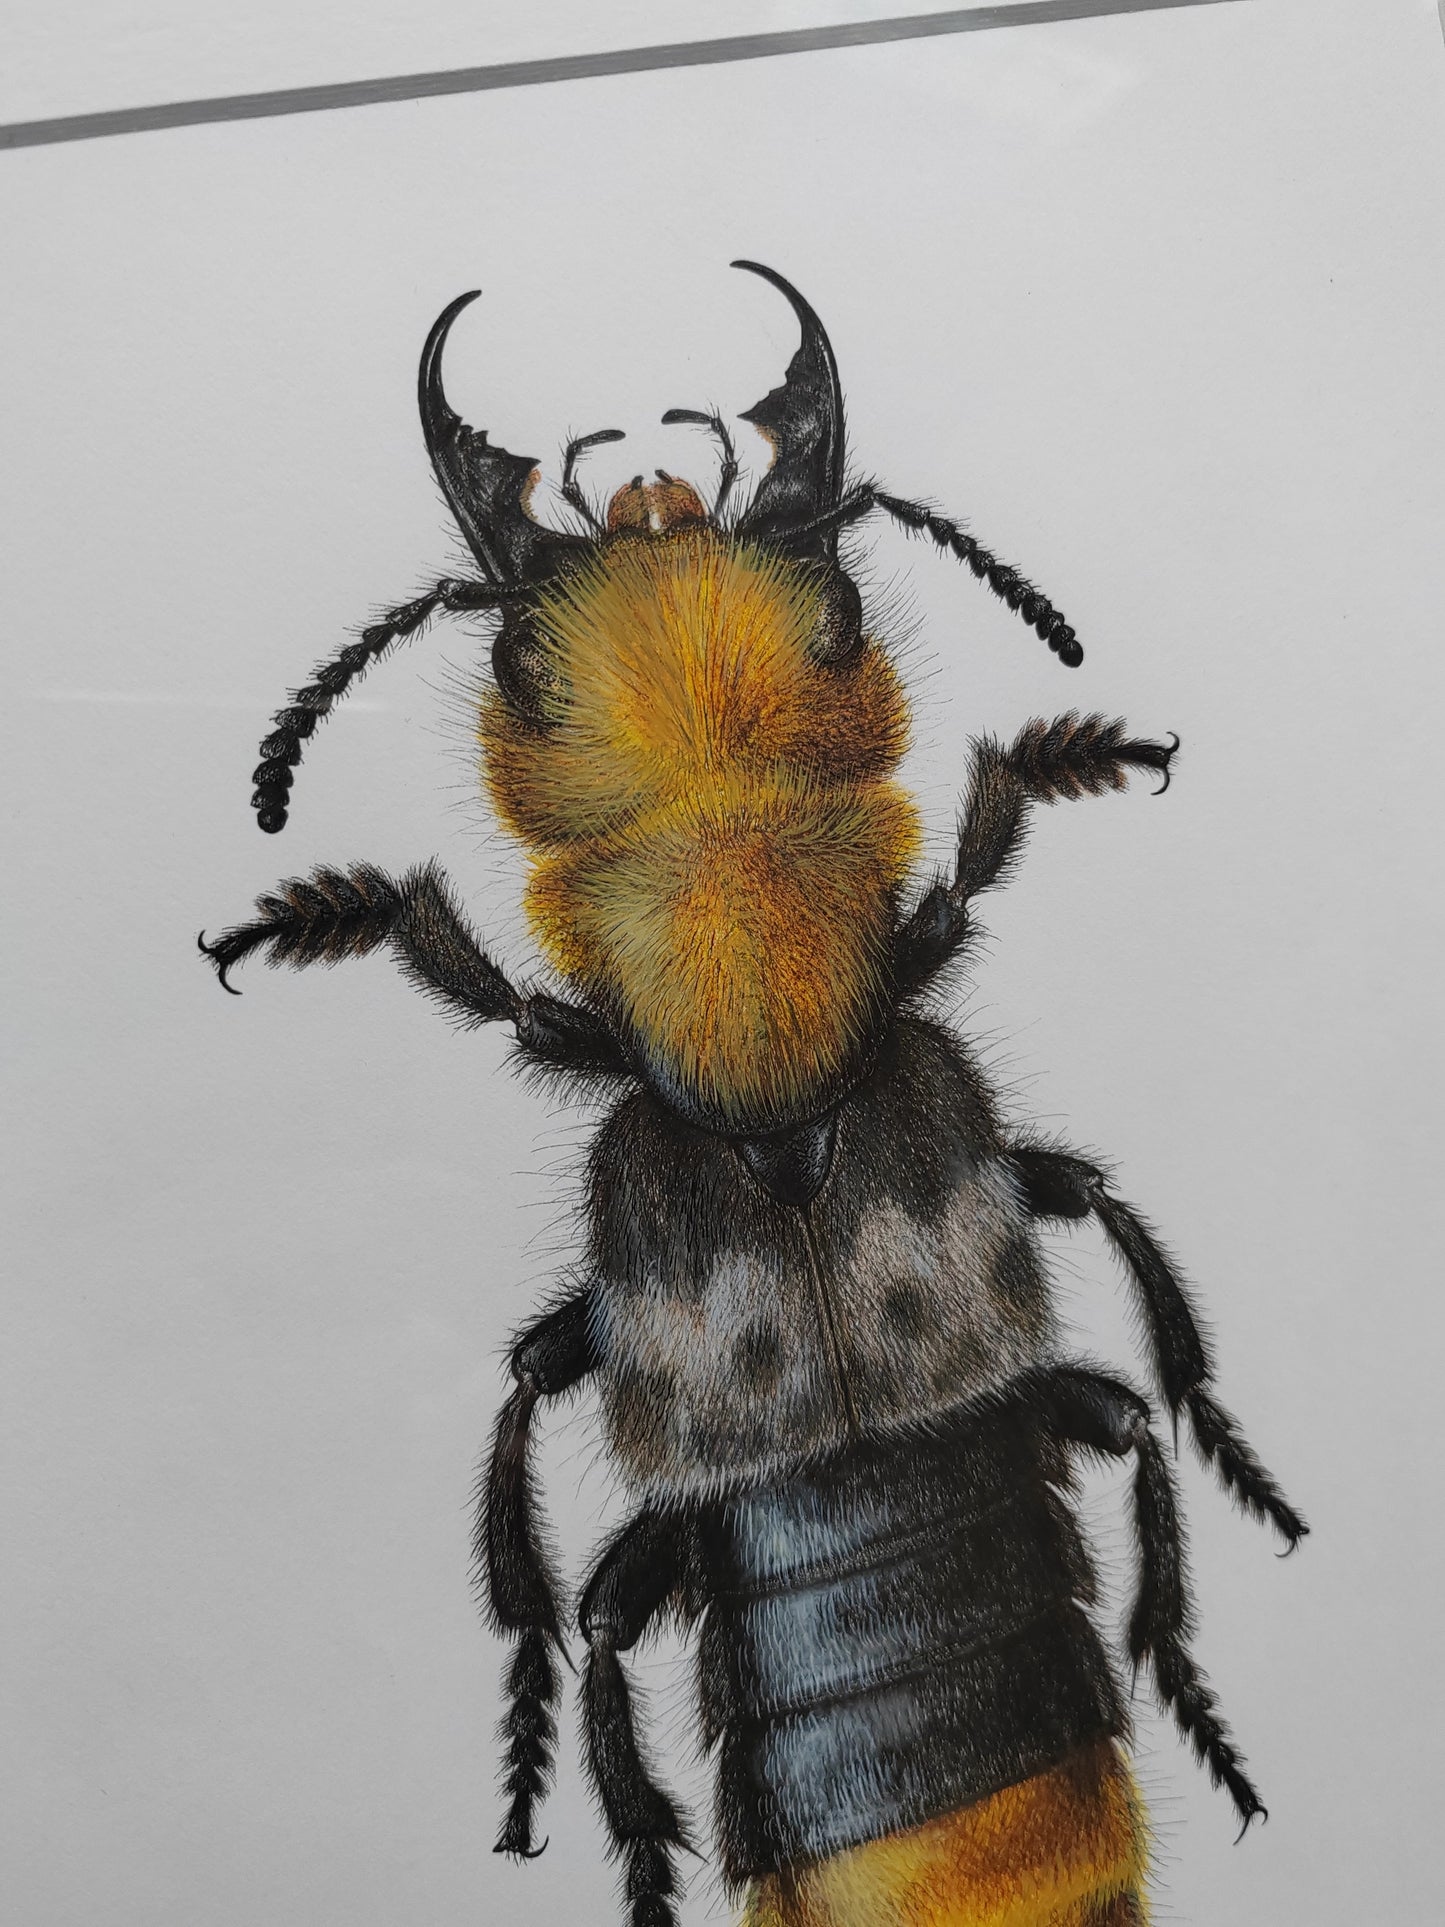 Framed Original Artwork - Emus hirtus, Golden Rove Beetle ('Kent Dancer')